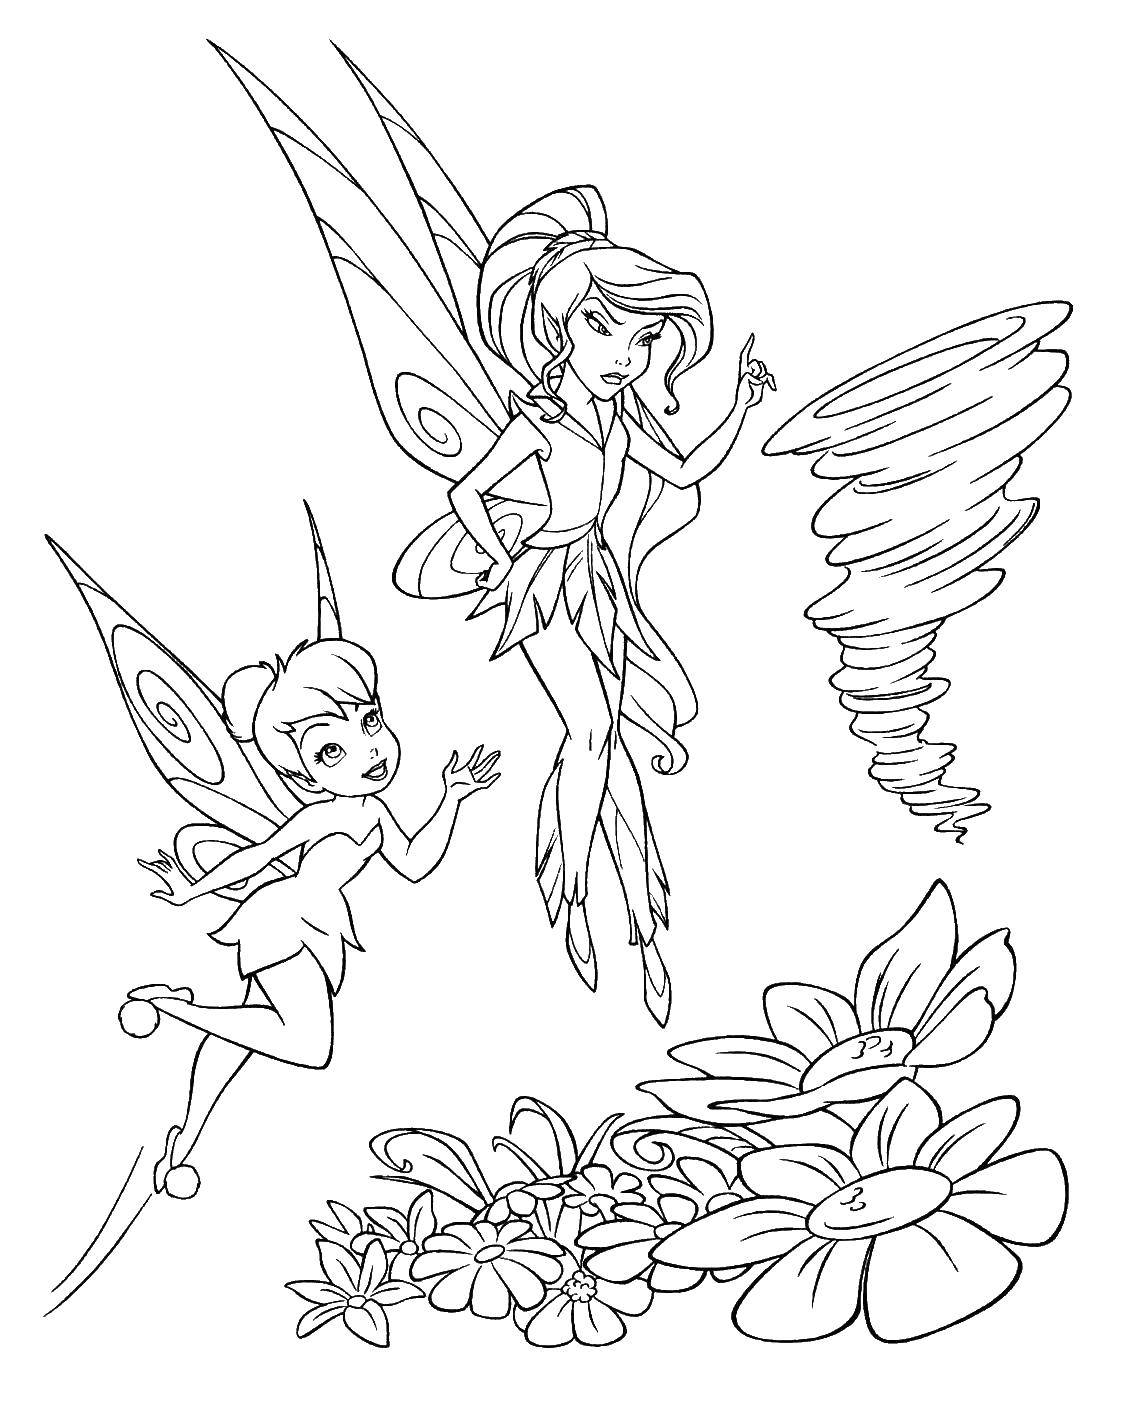 Coloring Fairies from disney fairies . Category fairies. Tags:  Fairy, forest, fairy tale.